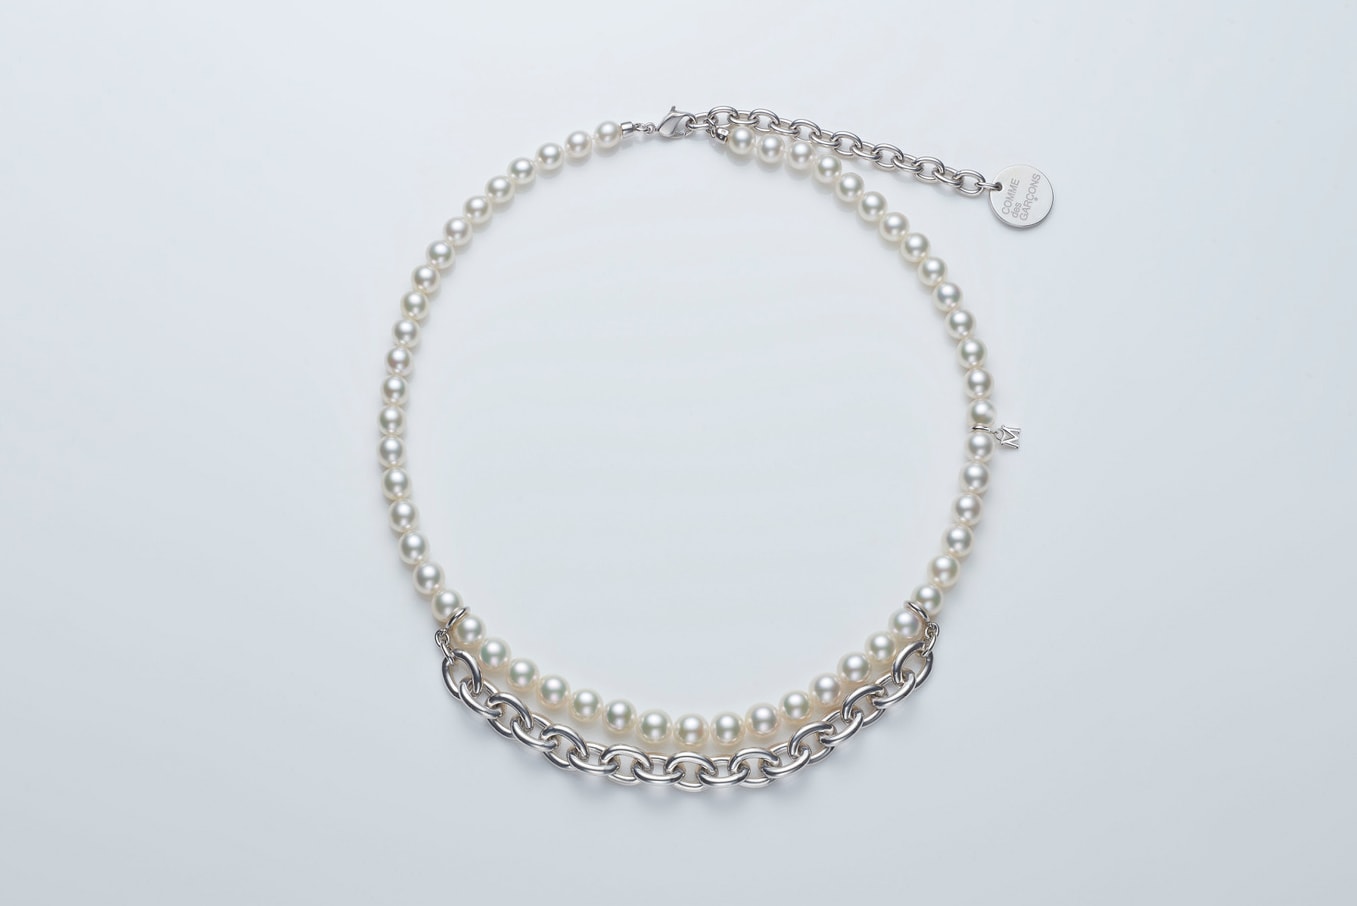 comme des garcons mikimoto cdg fine jewelry collaboration rei kawakubo pearl necklaces 